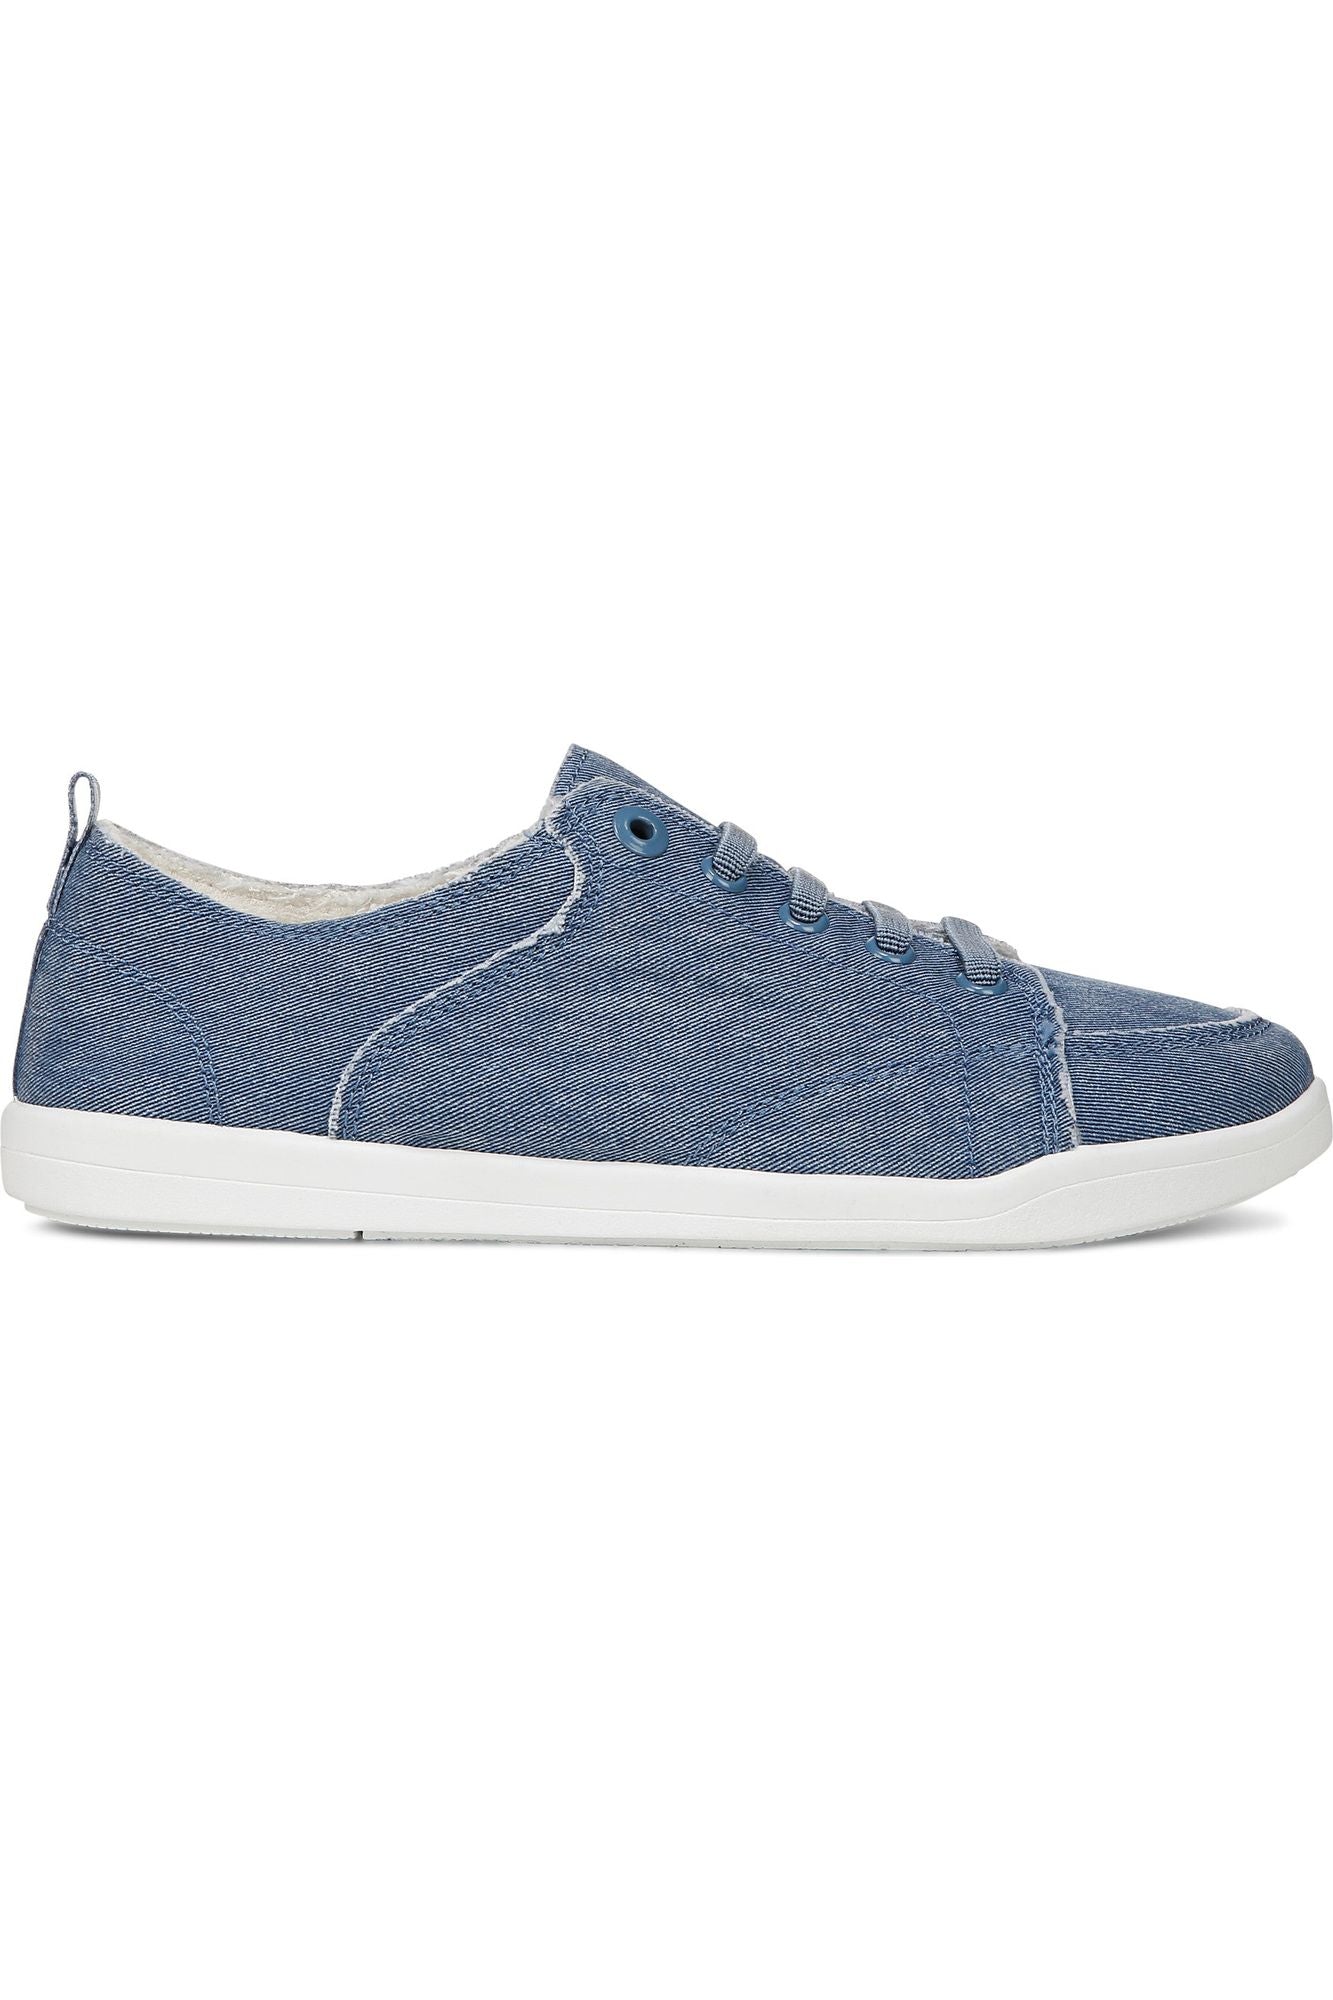 Vionic Canvas Laced Denim Sneaker - Style Pismo CNVSm , denim blue, side2